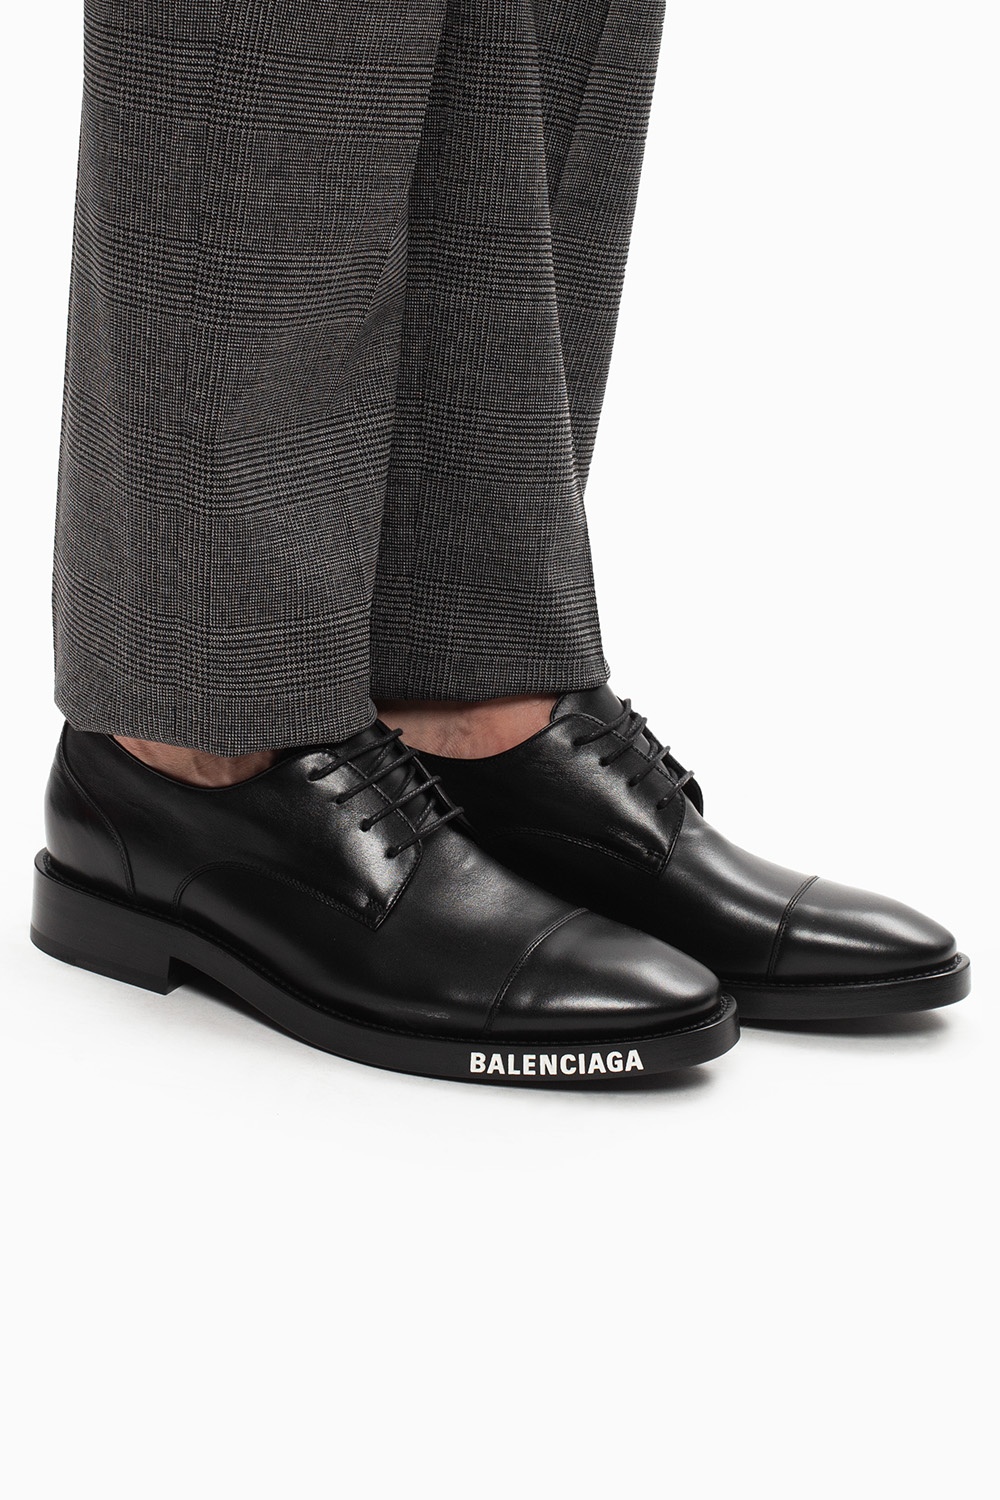 Balenciaga nike air zoom type men lifestyle basic shoes sneakers new